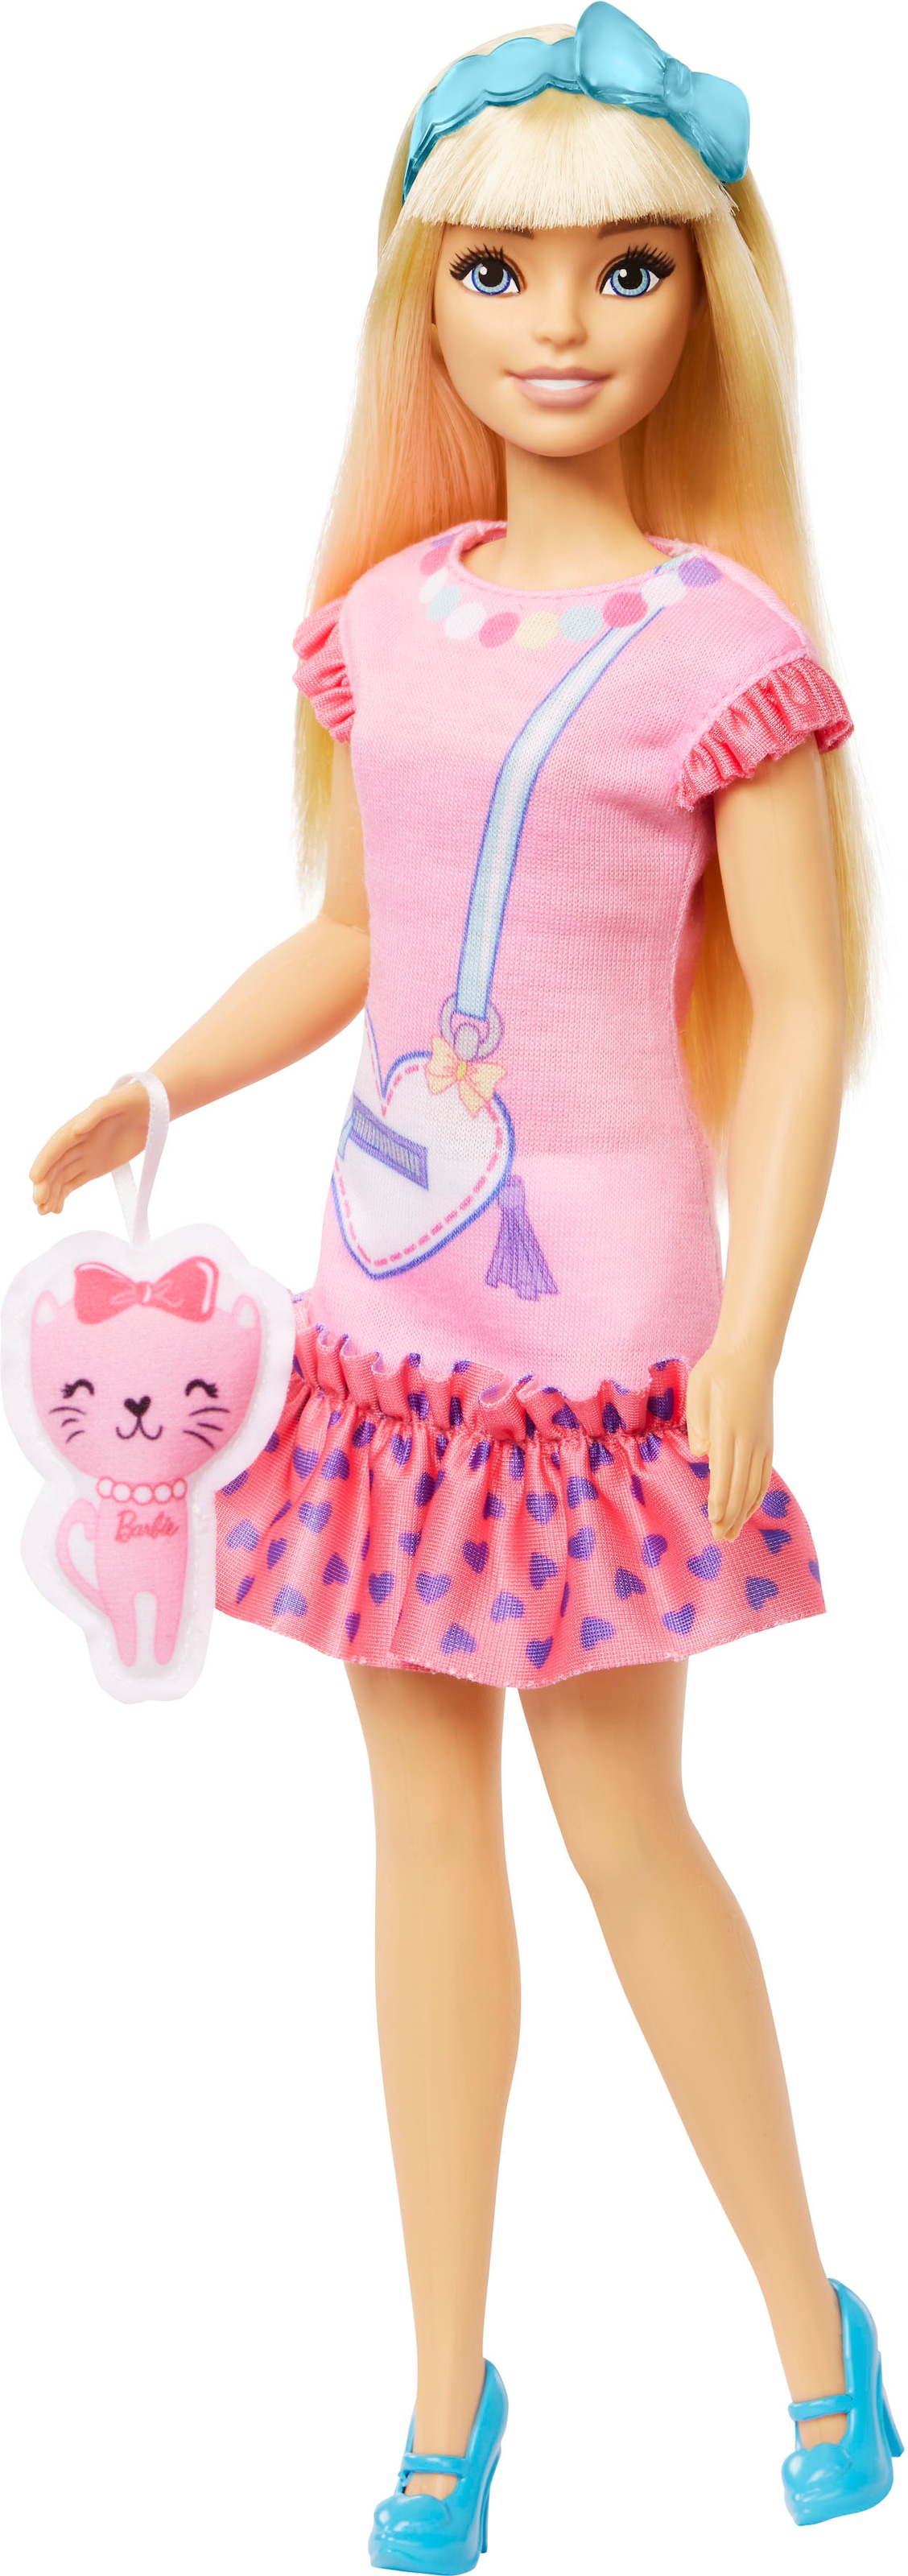 Barbie Anziehpuppe »My First Barbie, Malibu«, Größe ca. 34 cm bei OTTO